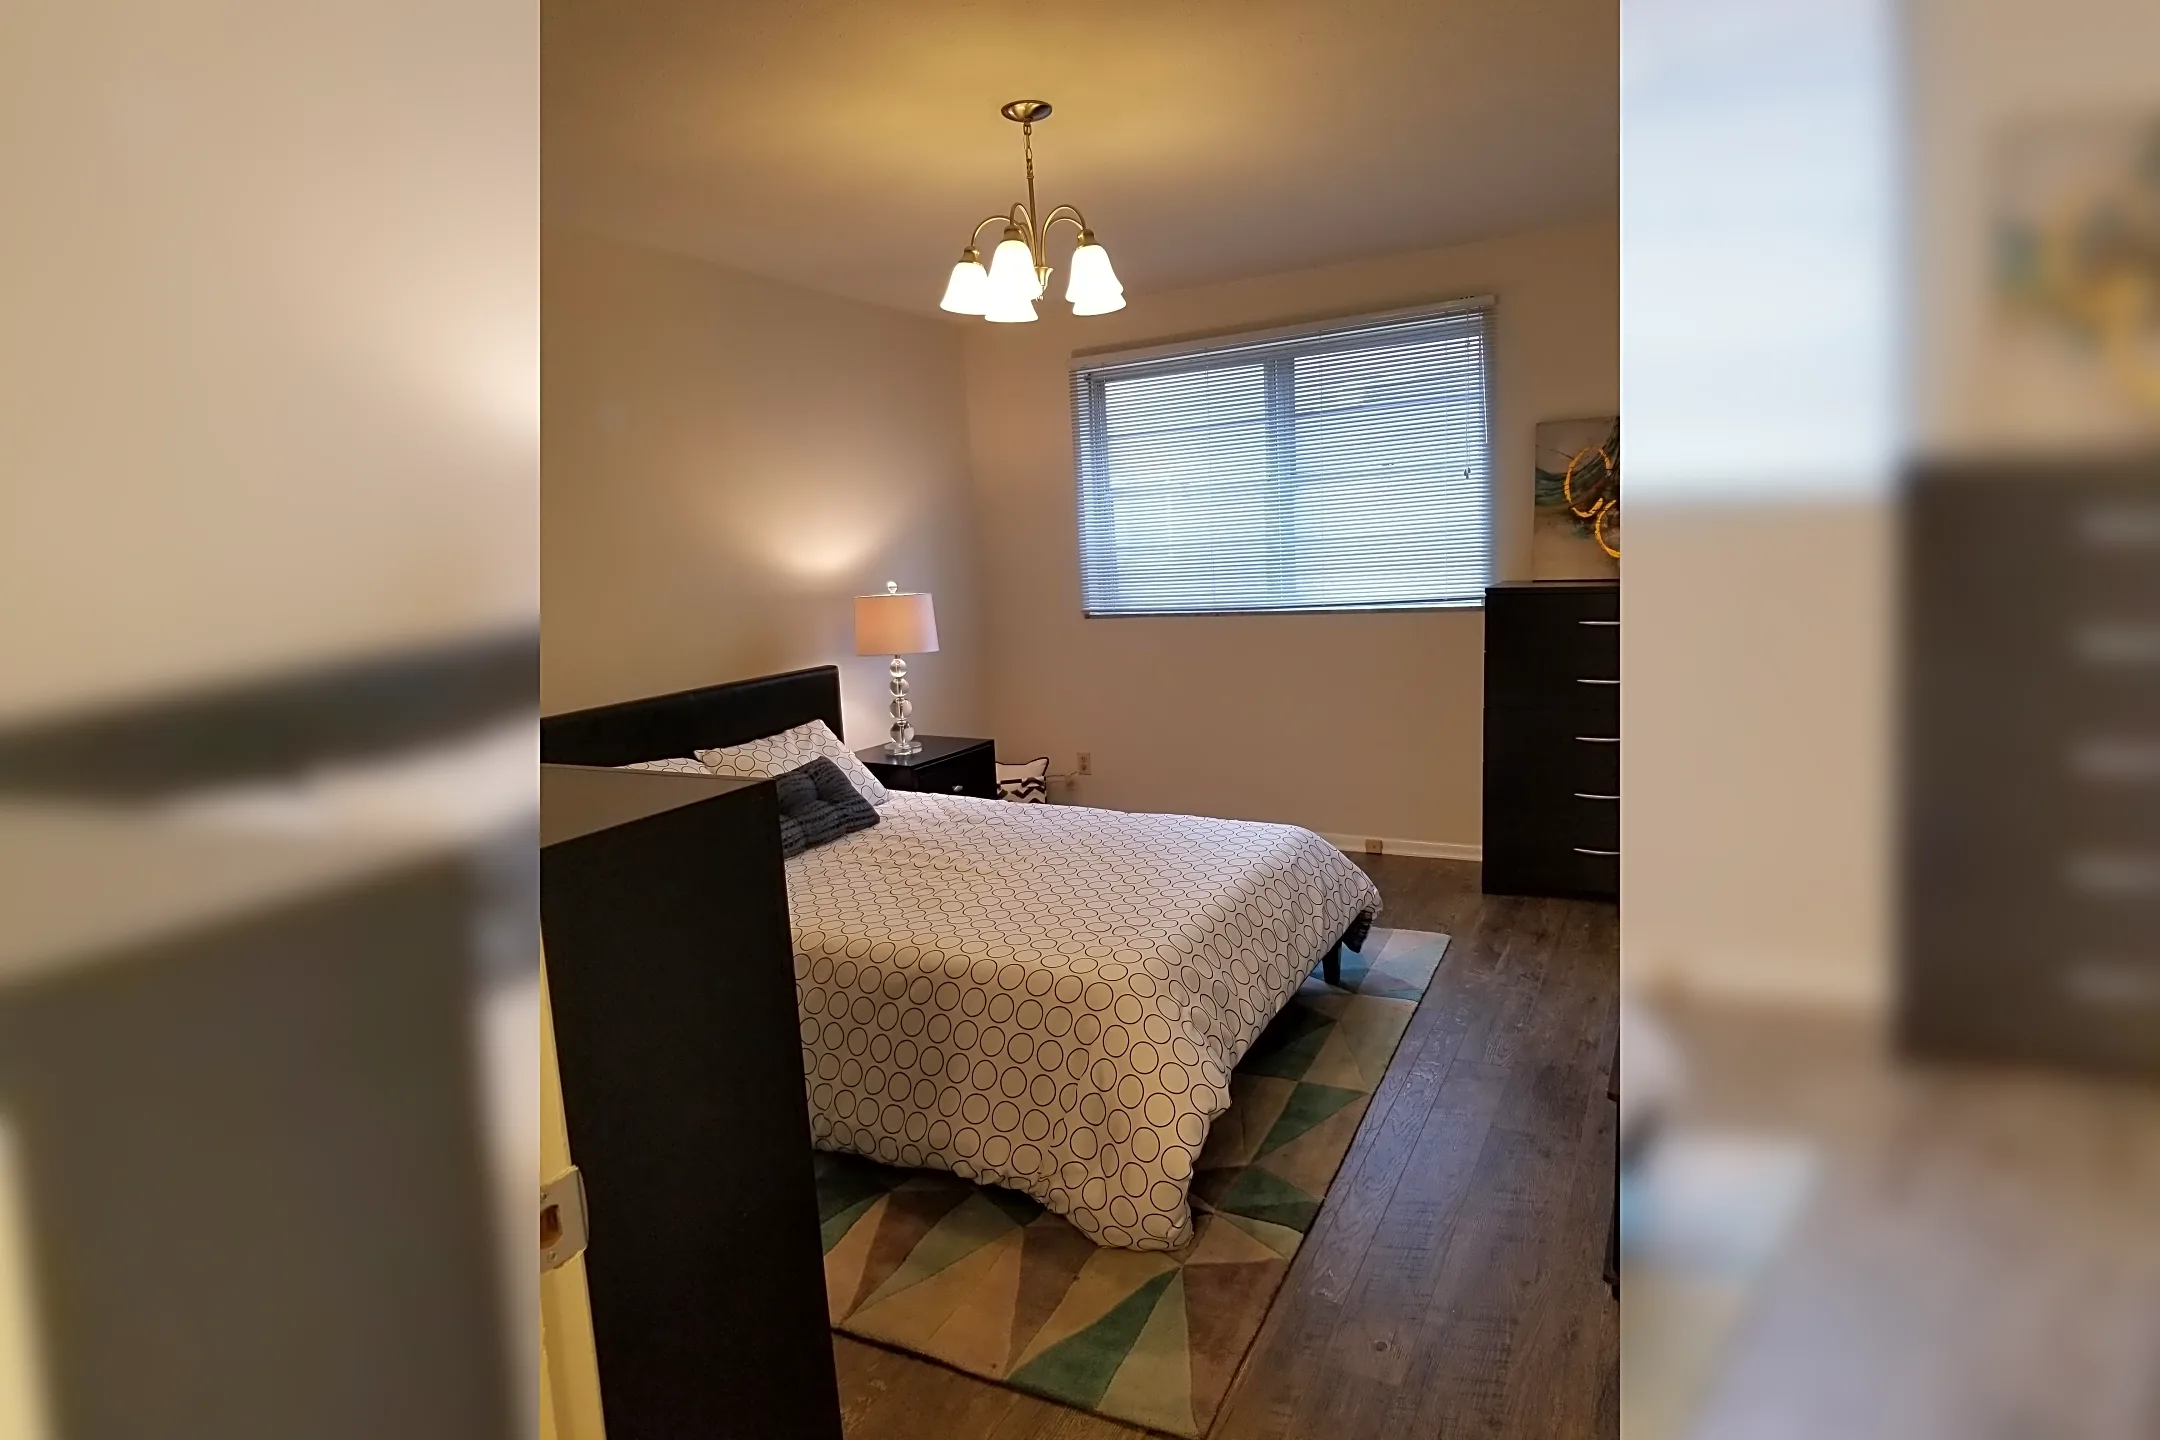 Bedroom - Lake Cove & Alexander - Lakewood, OH